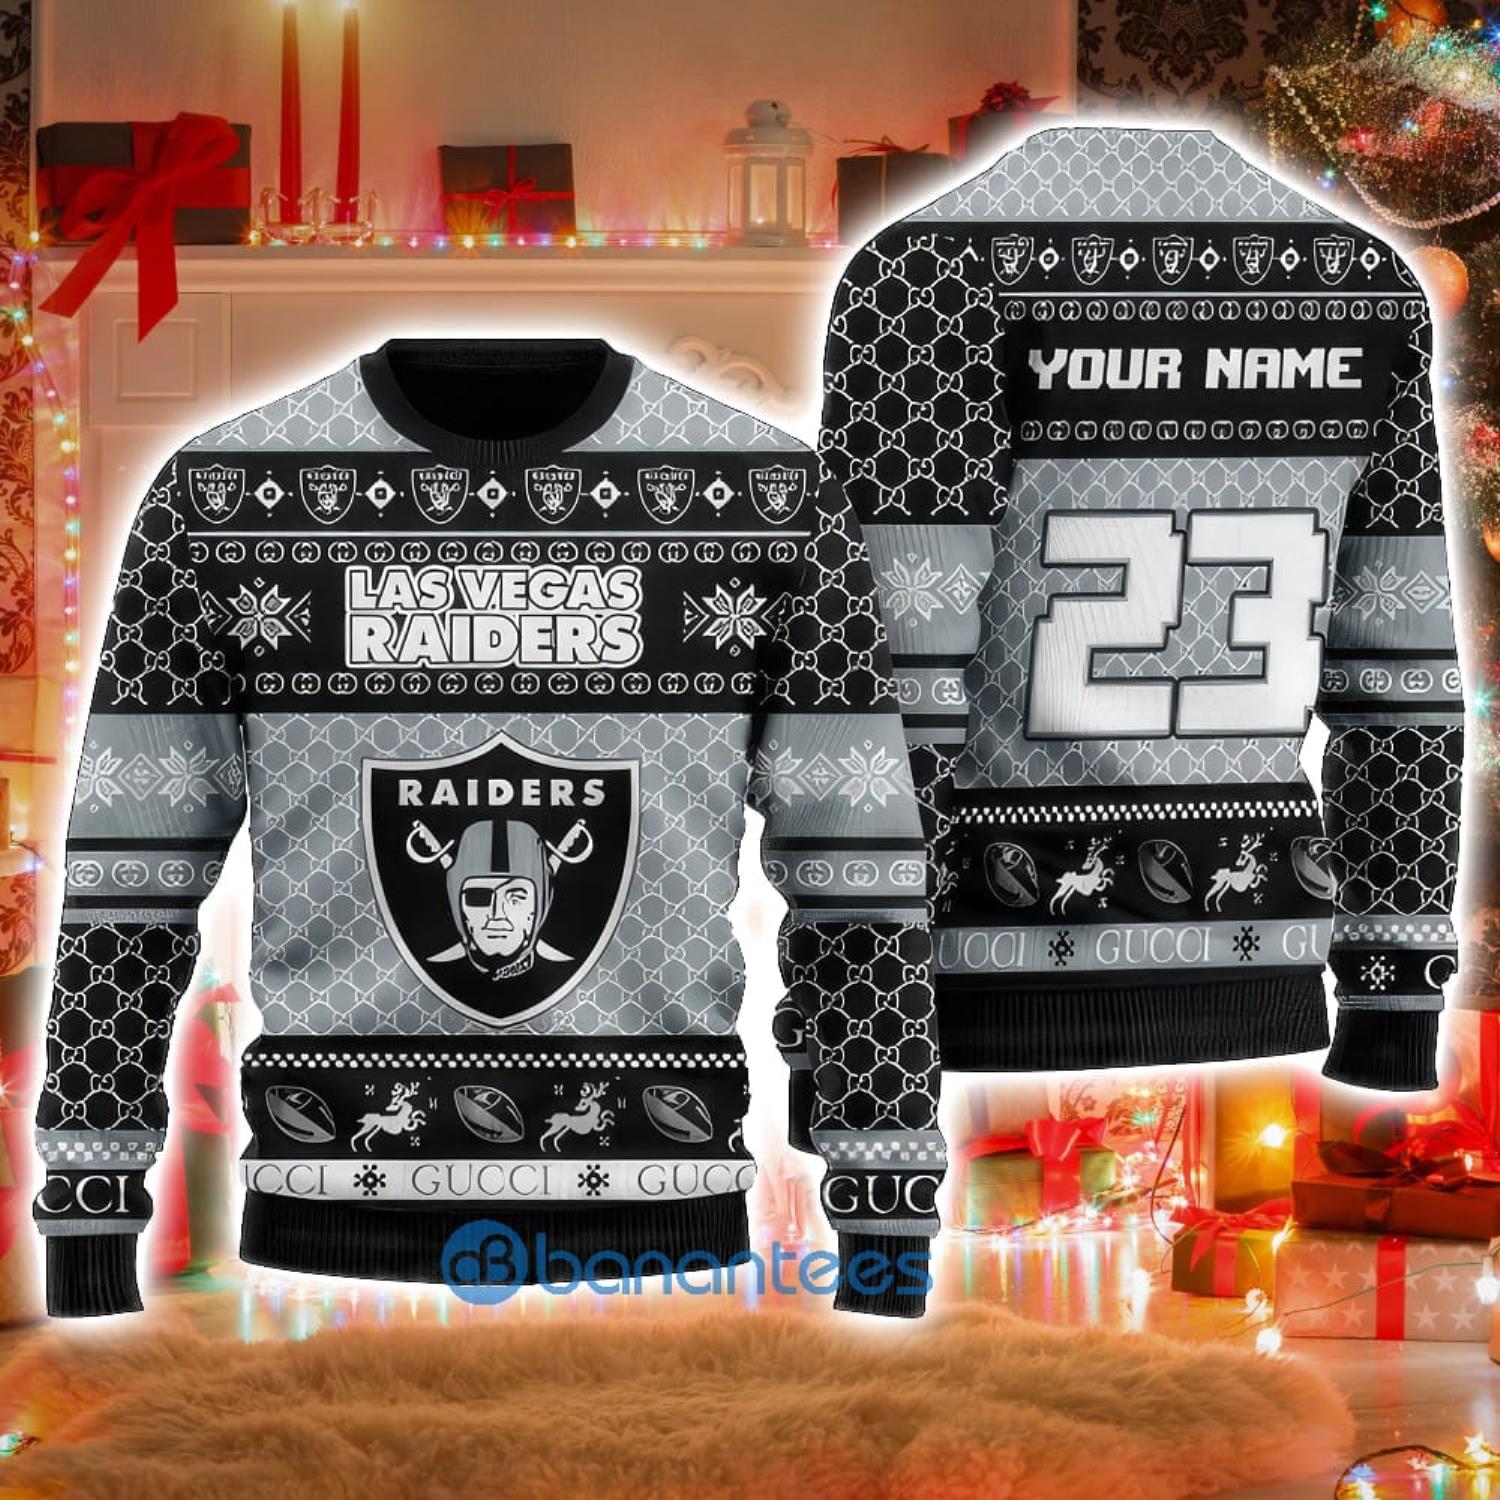 NFL Las Vegas Raiders Custom Name And Number Ugly Christmas Sweater  Christmas Gift For Sport Team - Banantees